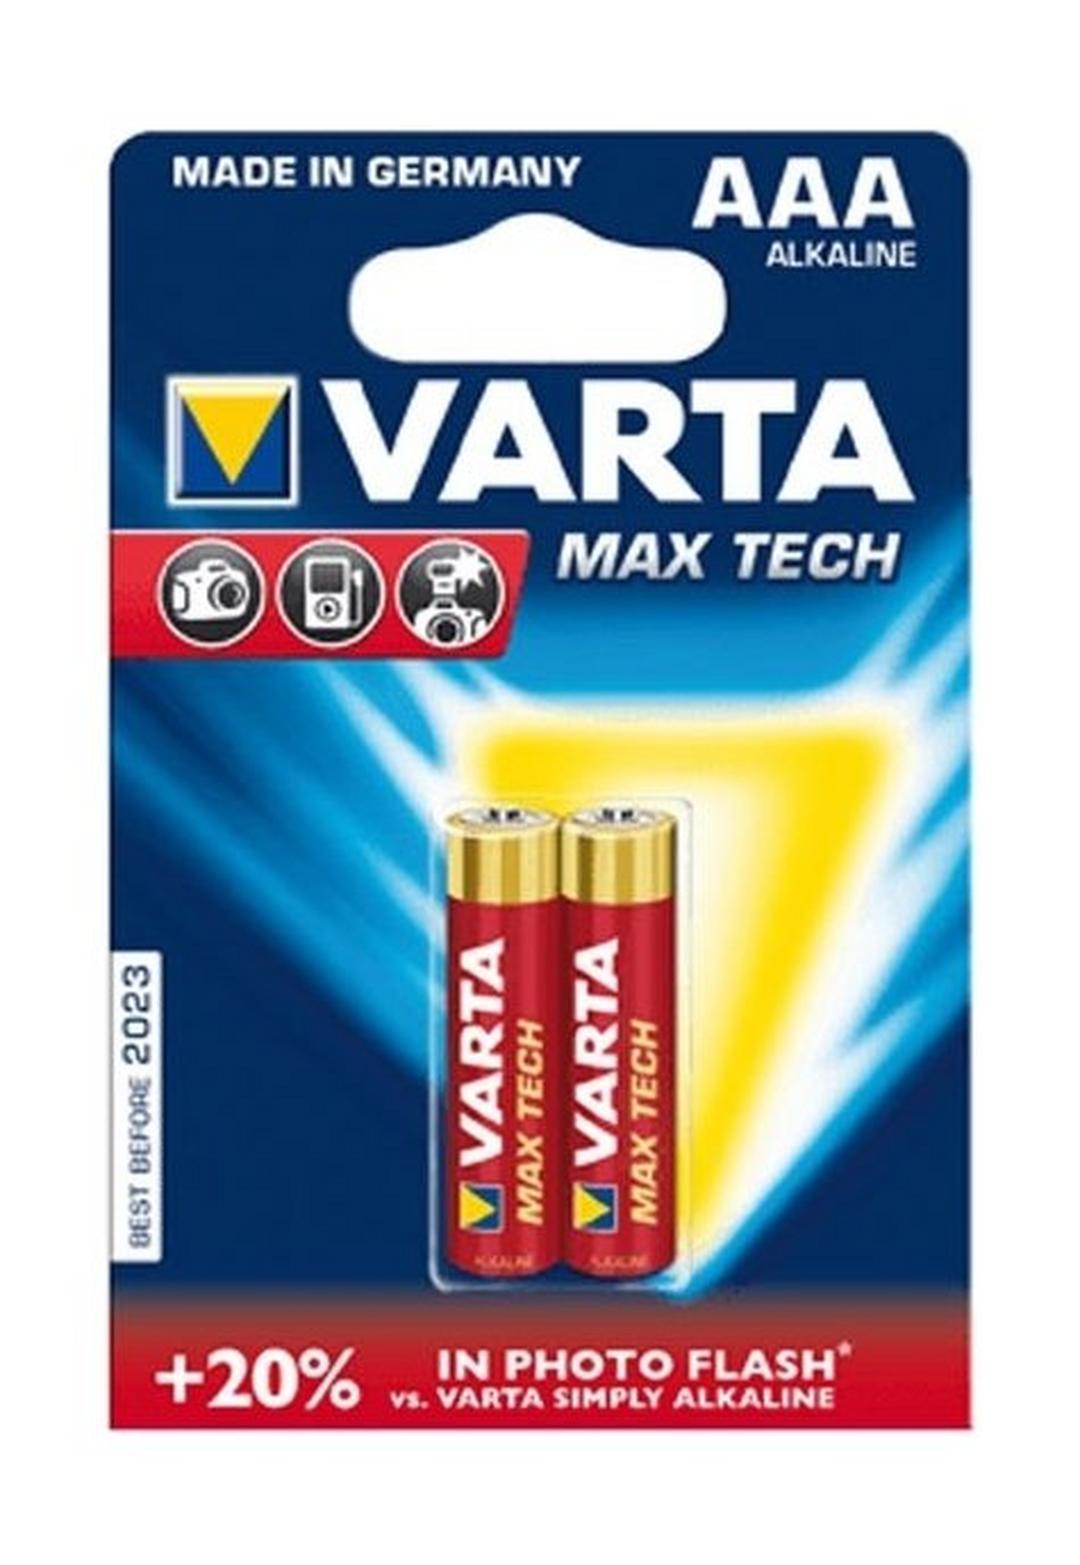 Varta MT 2 AAA Max Tech Alkaline Battery - 2 Pcs